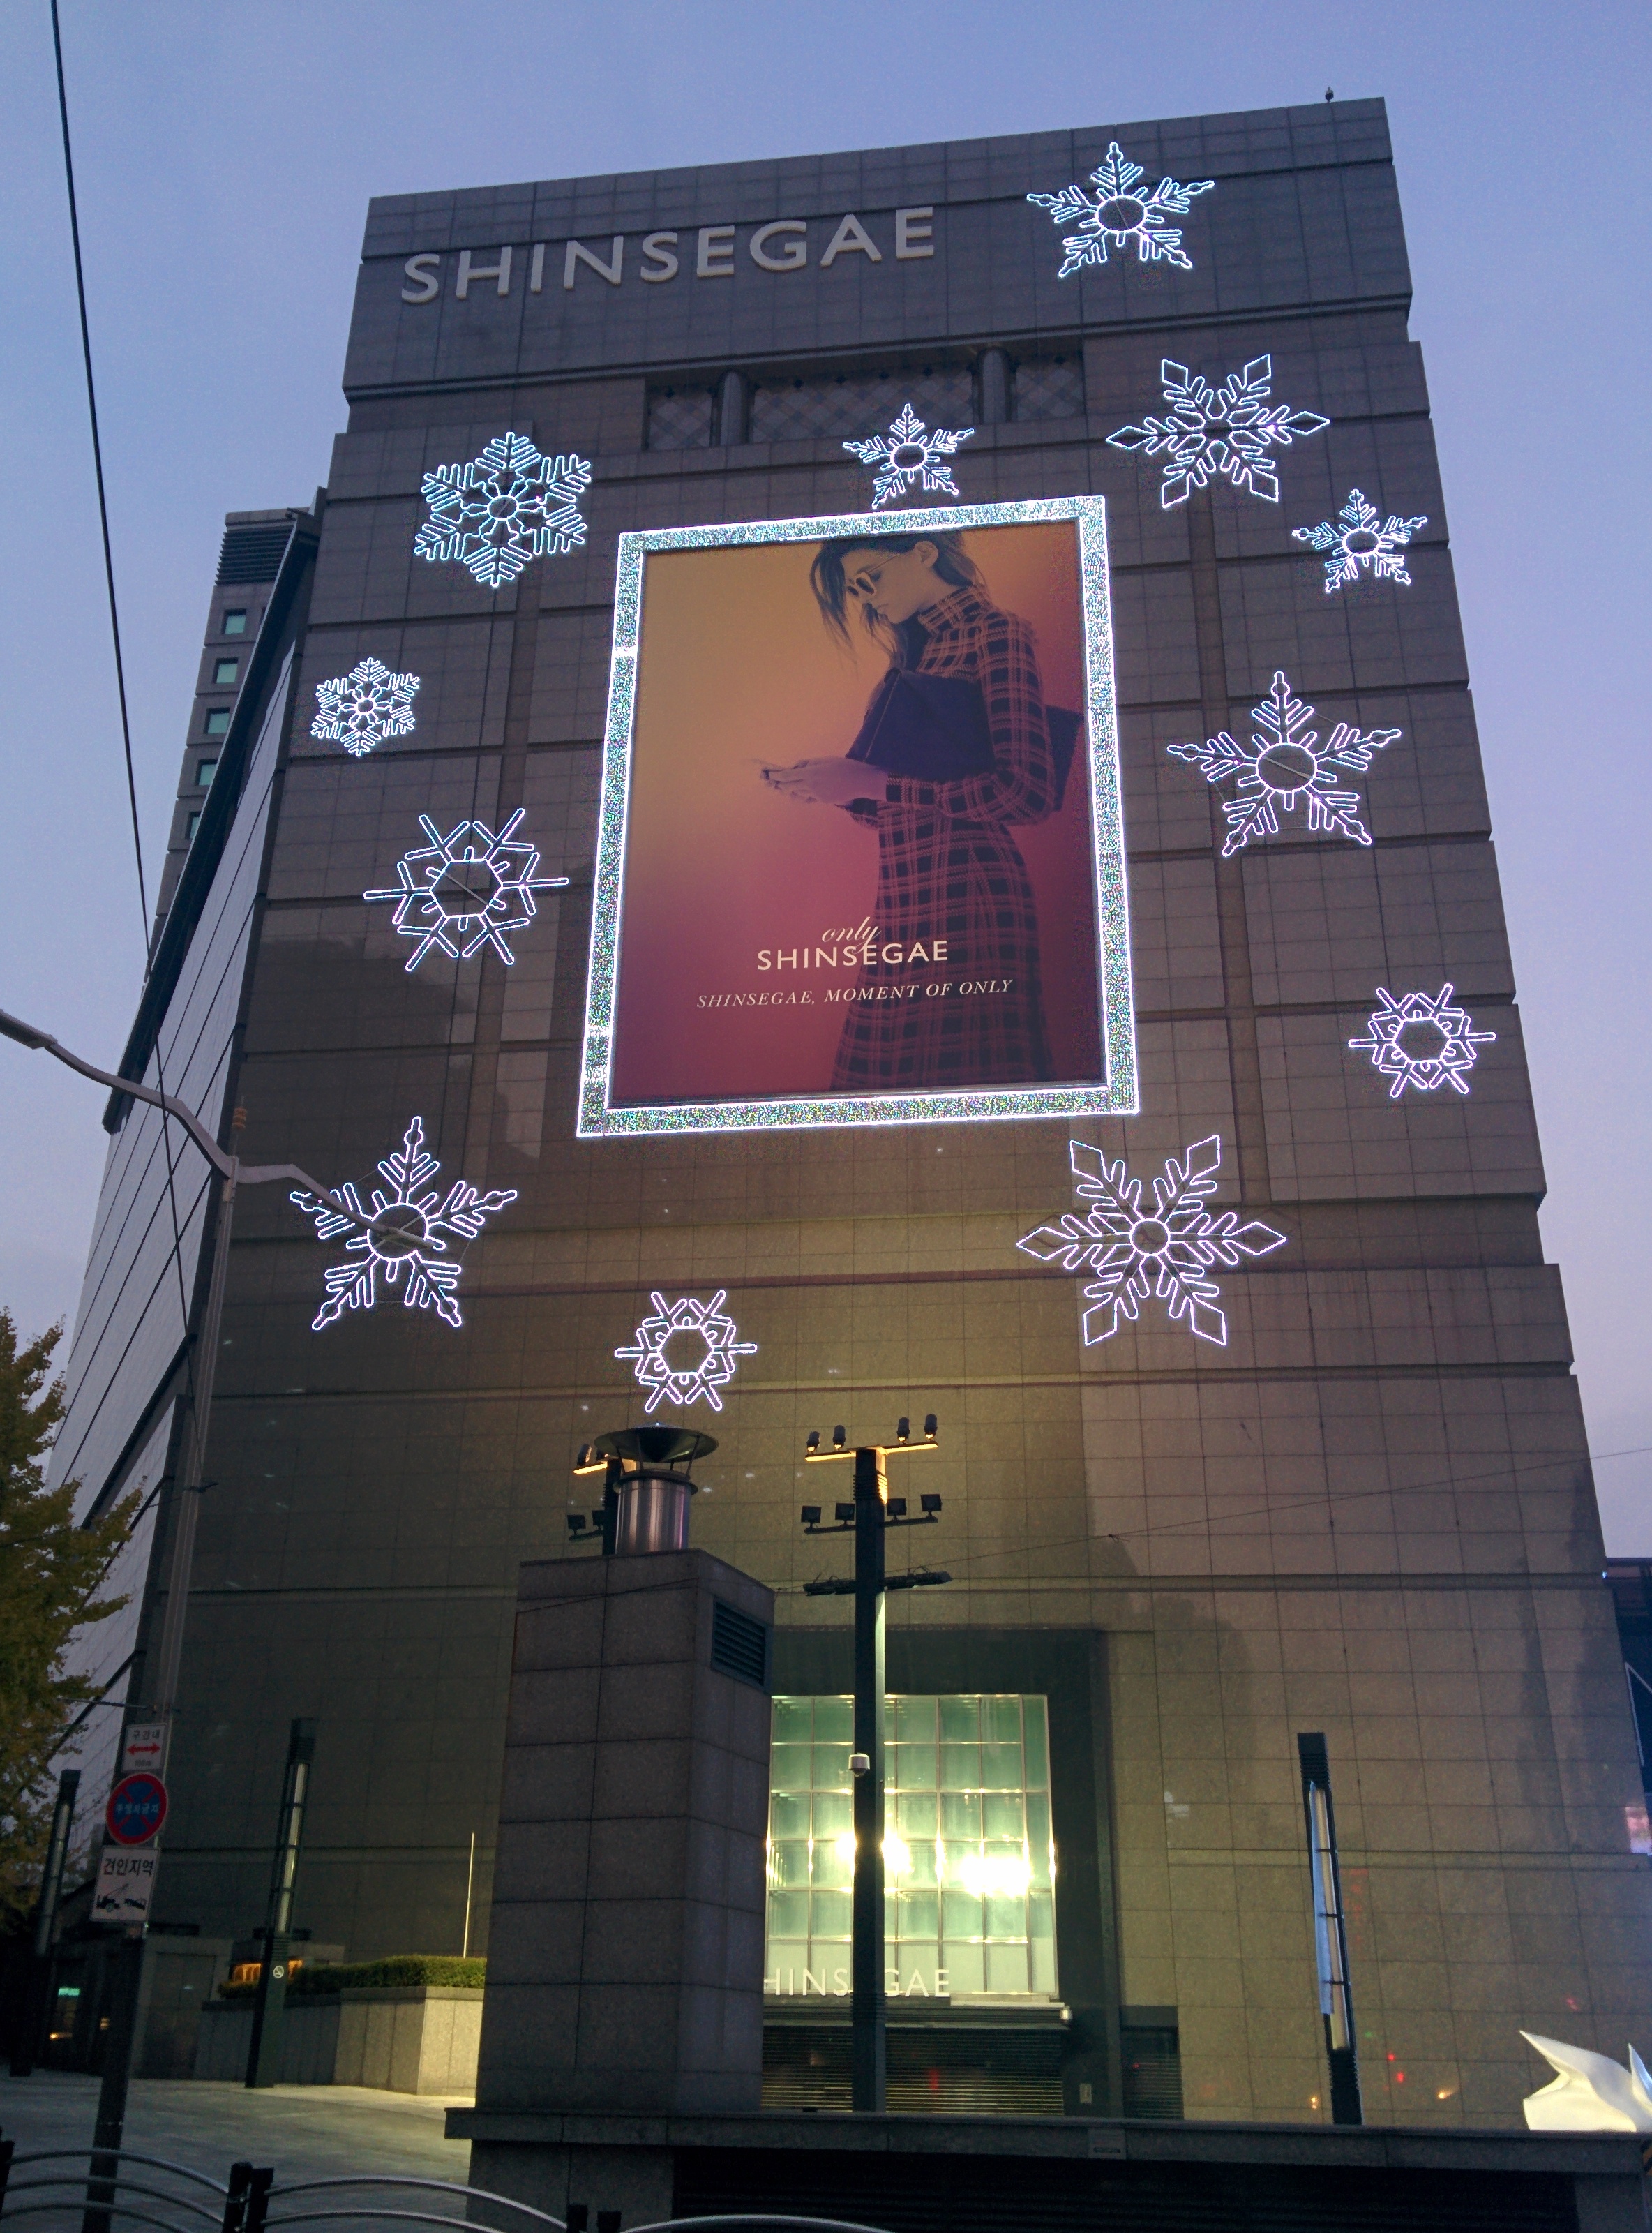 IMG_20151110_065328.jpg 네온사인 밝힌 서울 신세계백화점